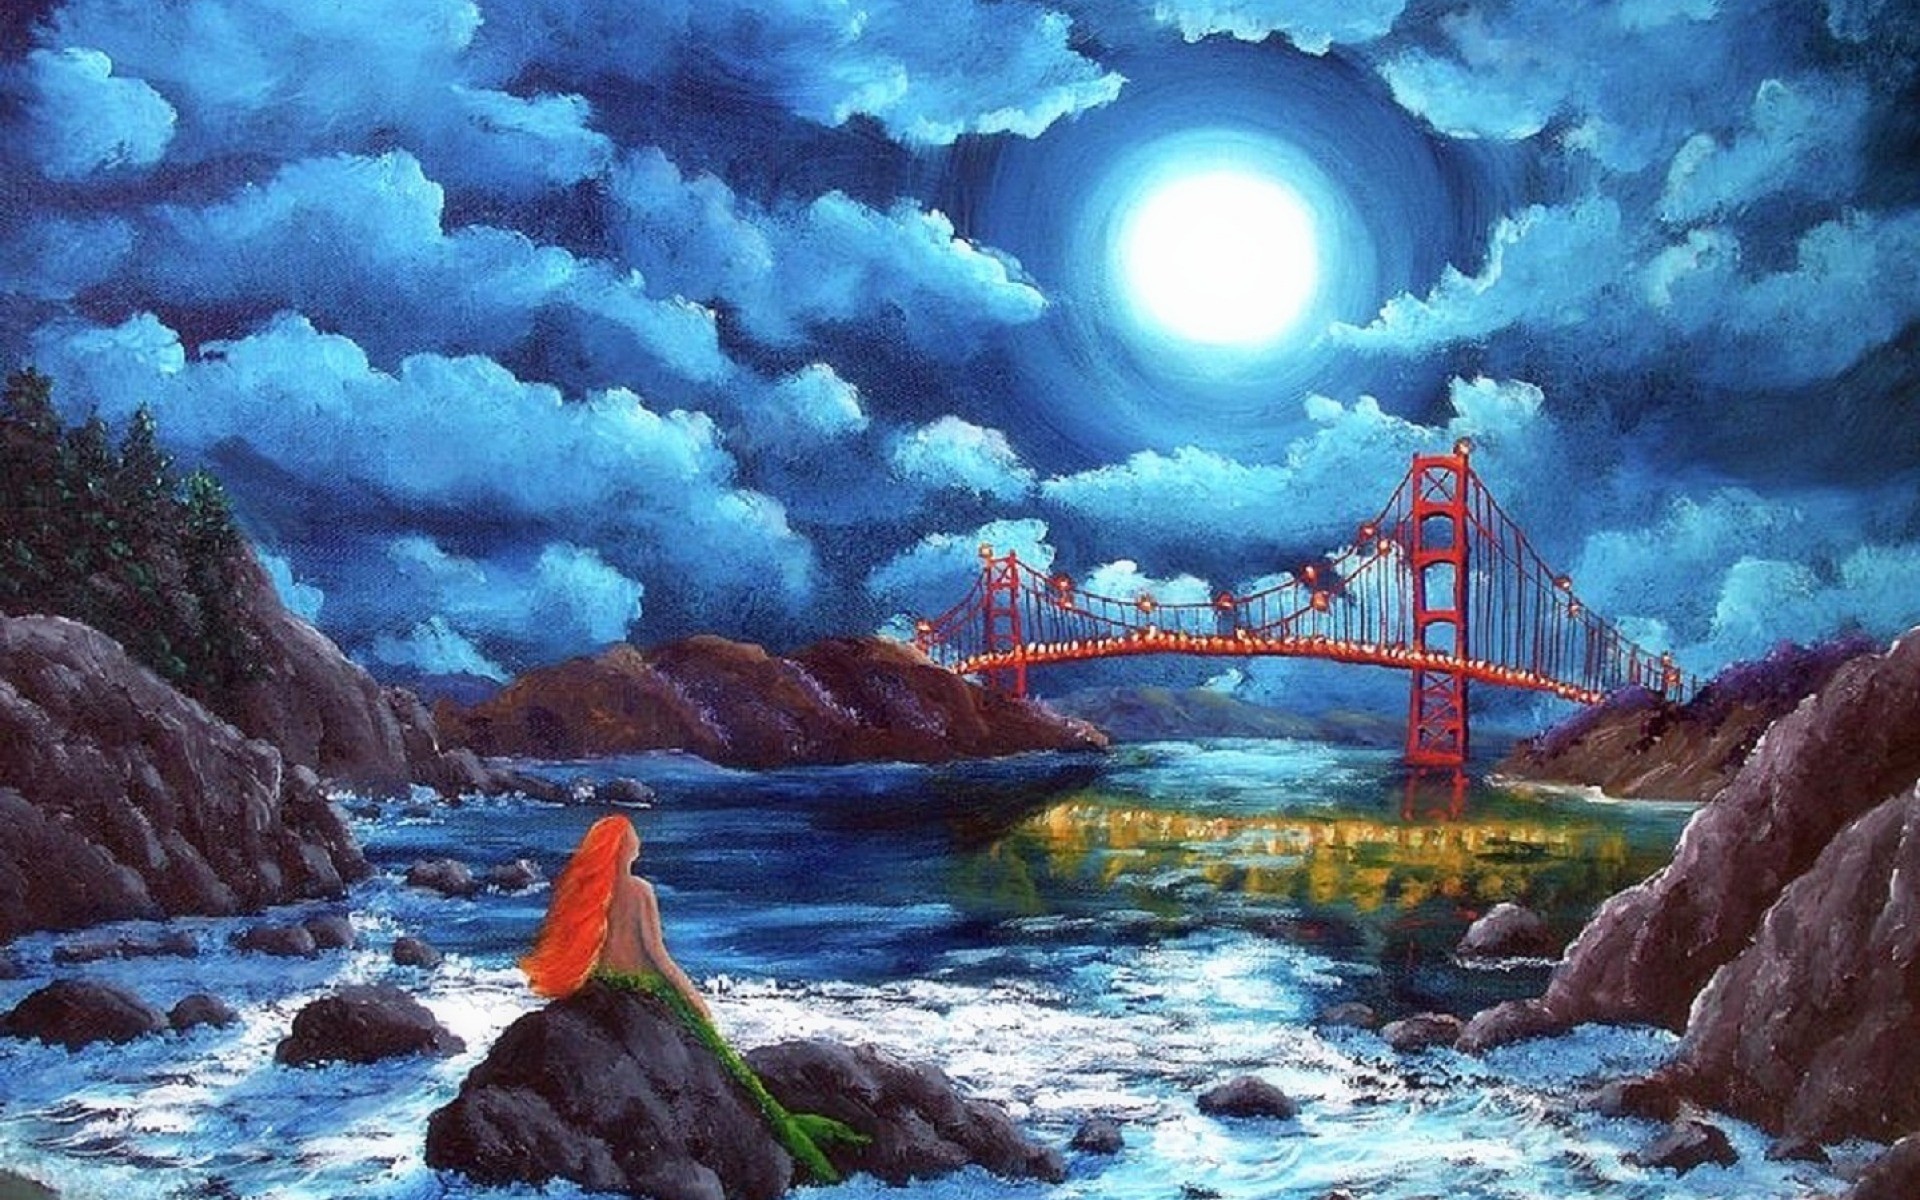 1920x1200 Golden Gate Bridge Mermaid wallpapers and stock photos